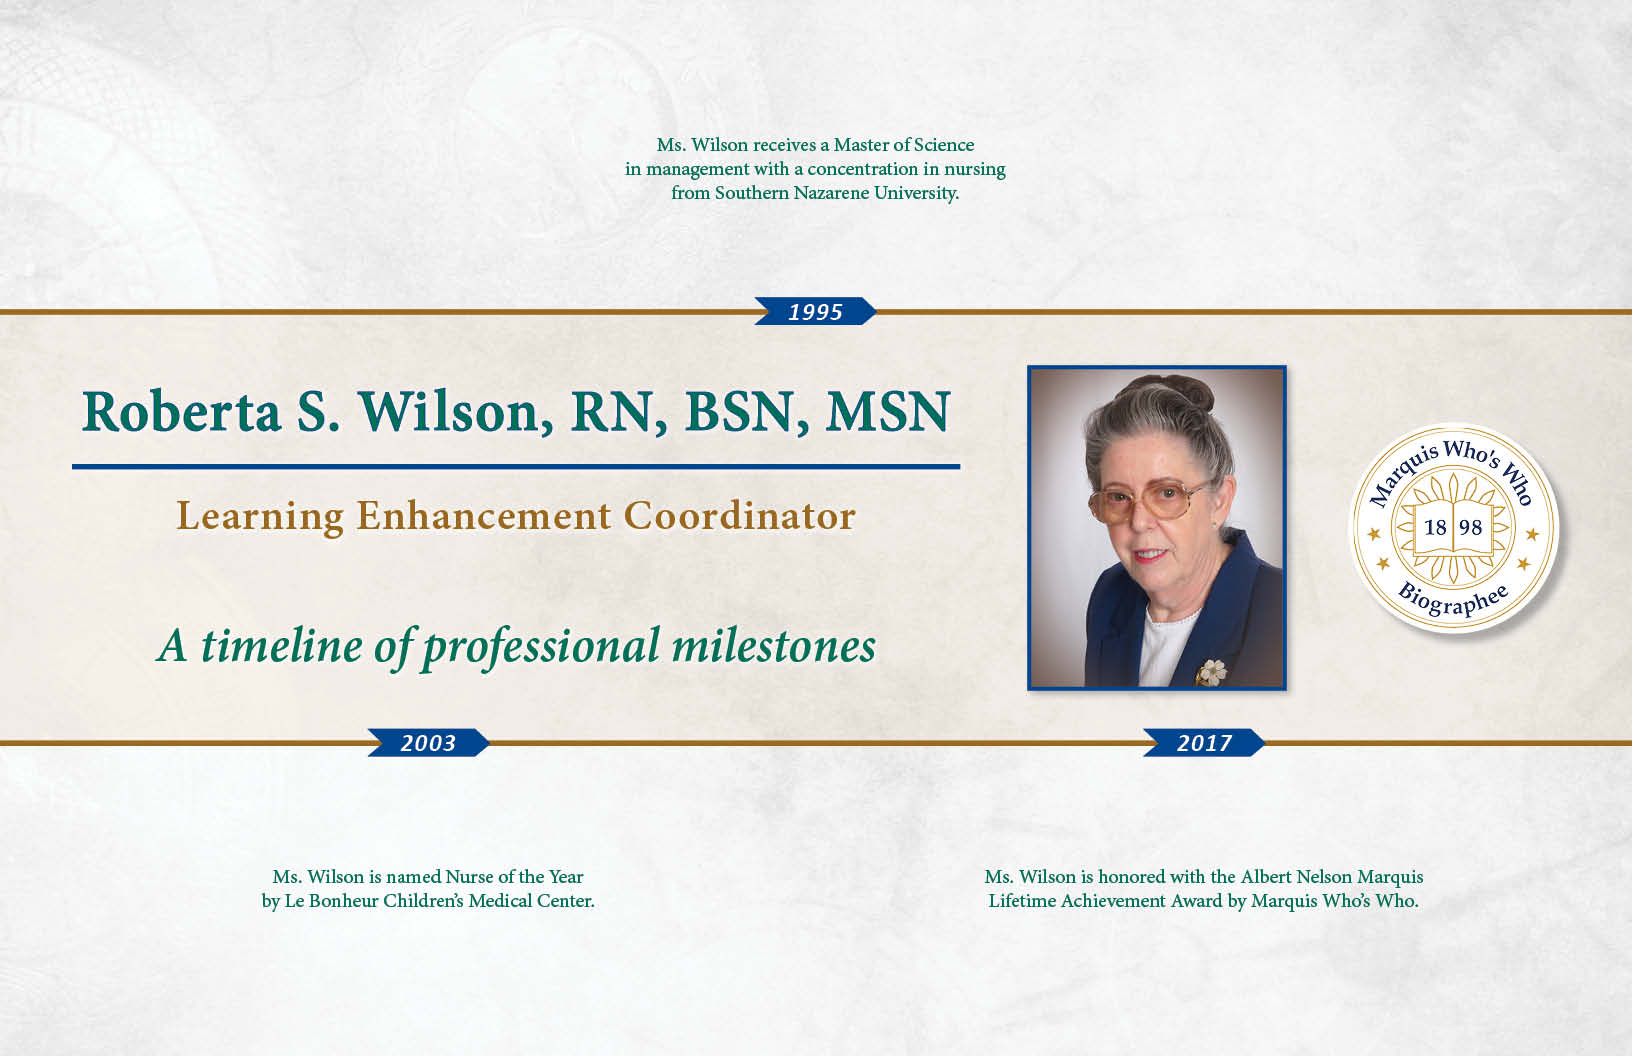 Roberta Wilson Professional Milestones